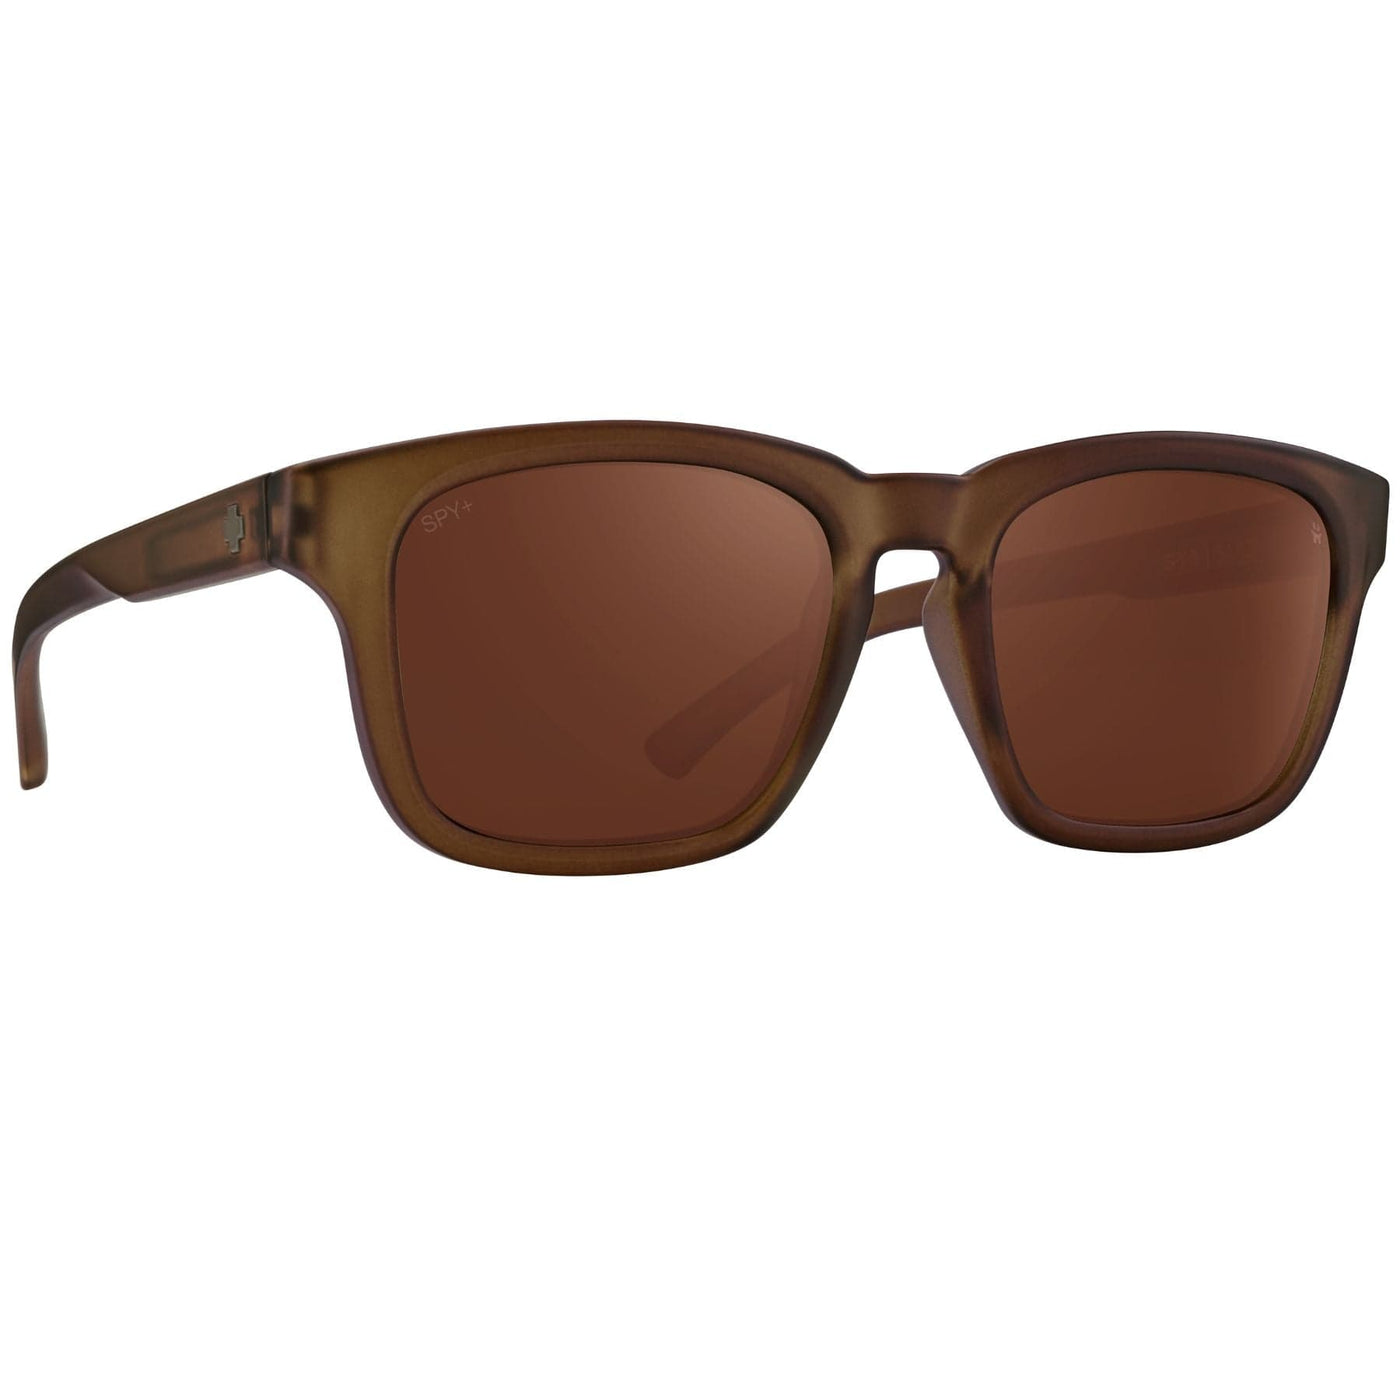 SPY SAXONY Sunglasses Translucent Brown - Happy Bronze Polar